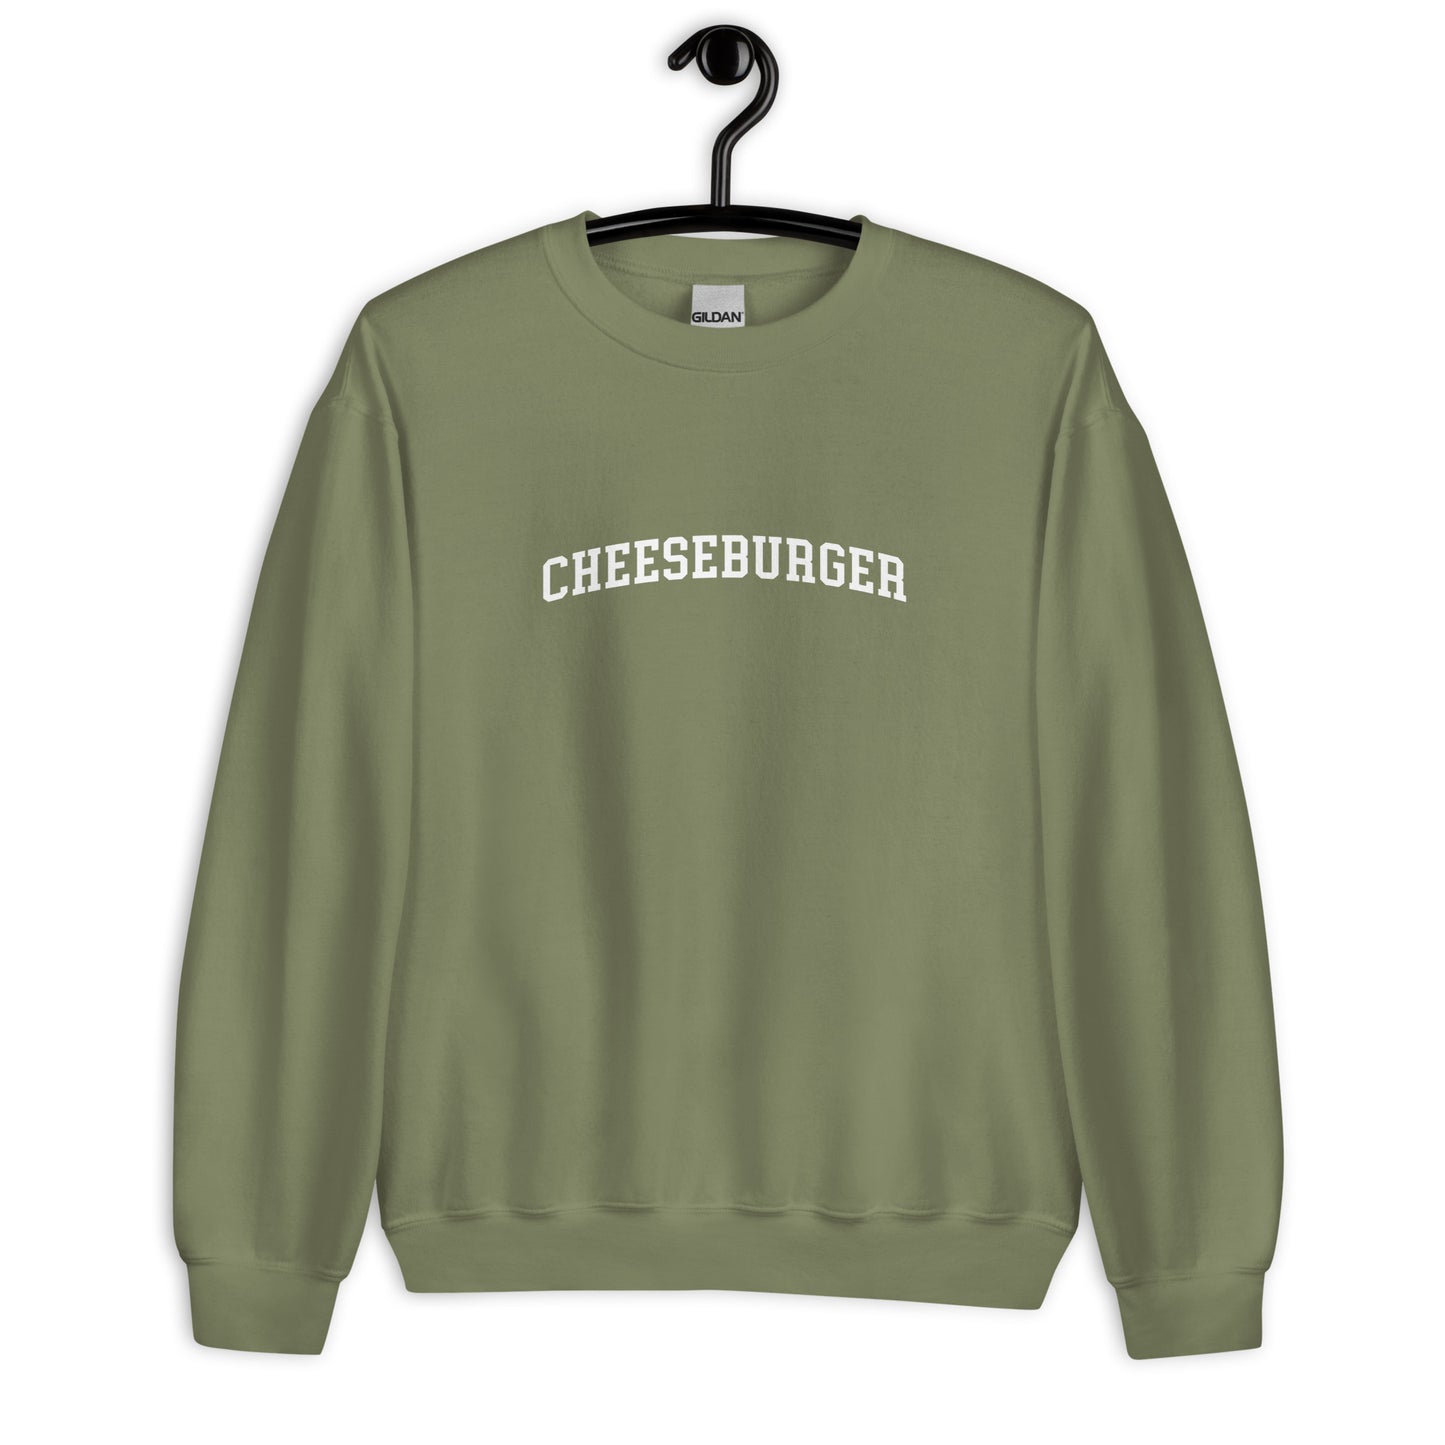 Cheeseburger Sweatshirt - Arched Font